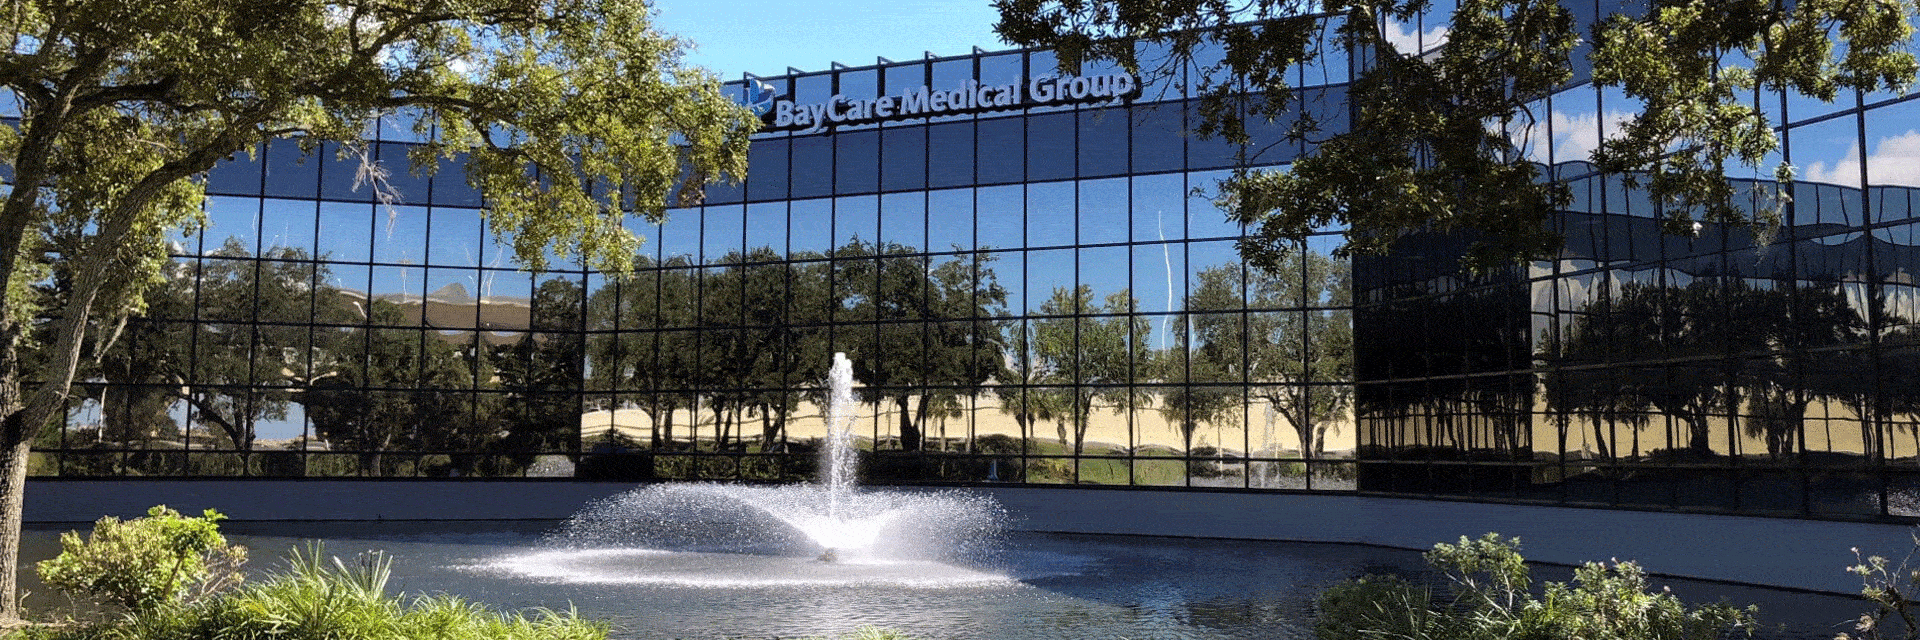 BayCare Medical Group Concourse Building Exterior